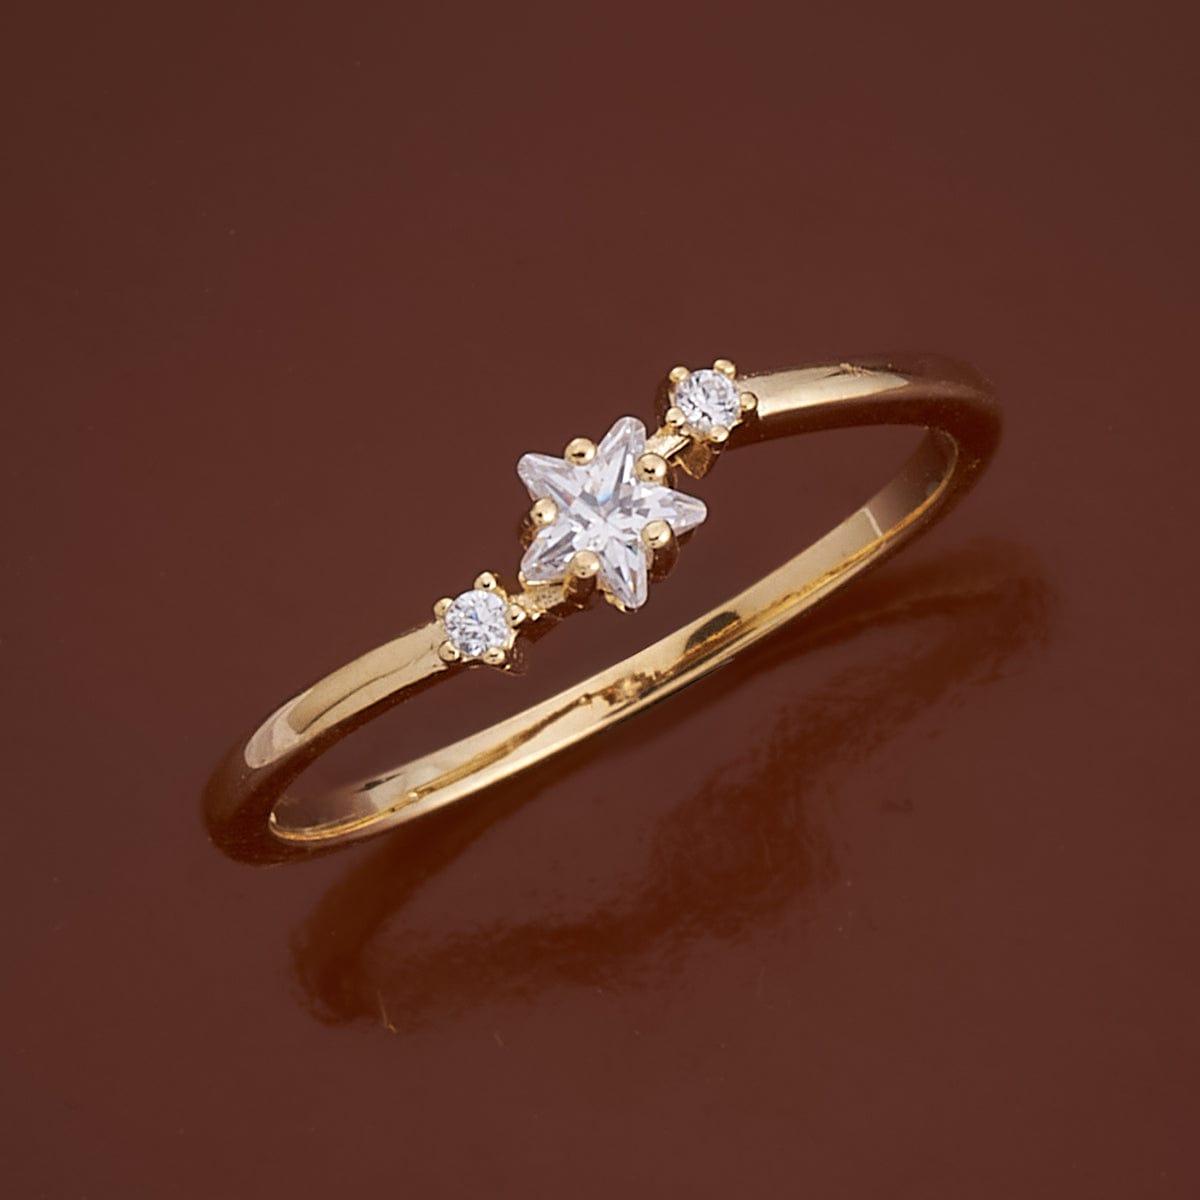 Gold rings jewelry | Gold finger rings | Gold rings aesthetic | Fashion  jewelry | #Gold #Ring #Women | Desain cincin emas, Desain cincin, Perhiasan  emas